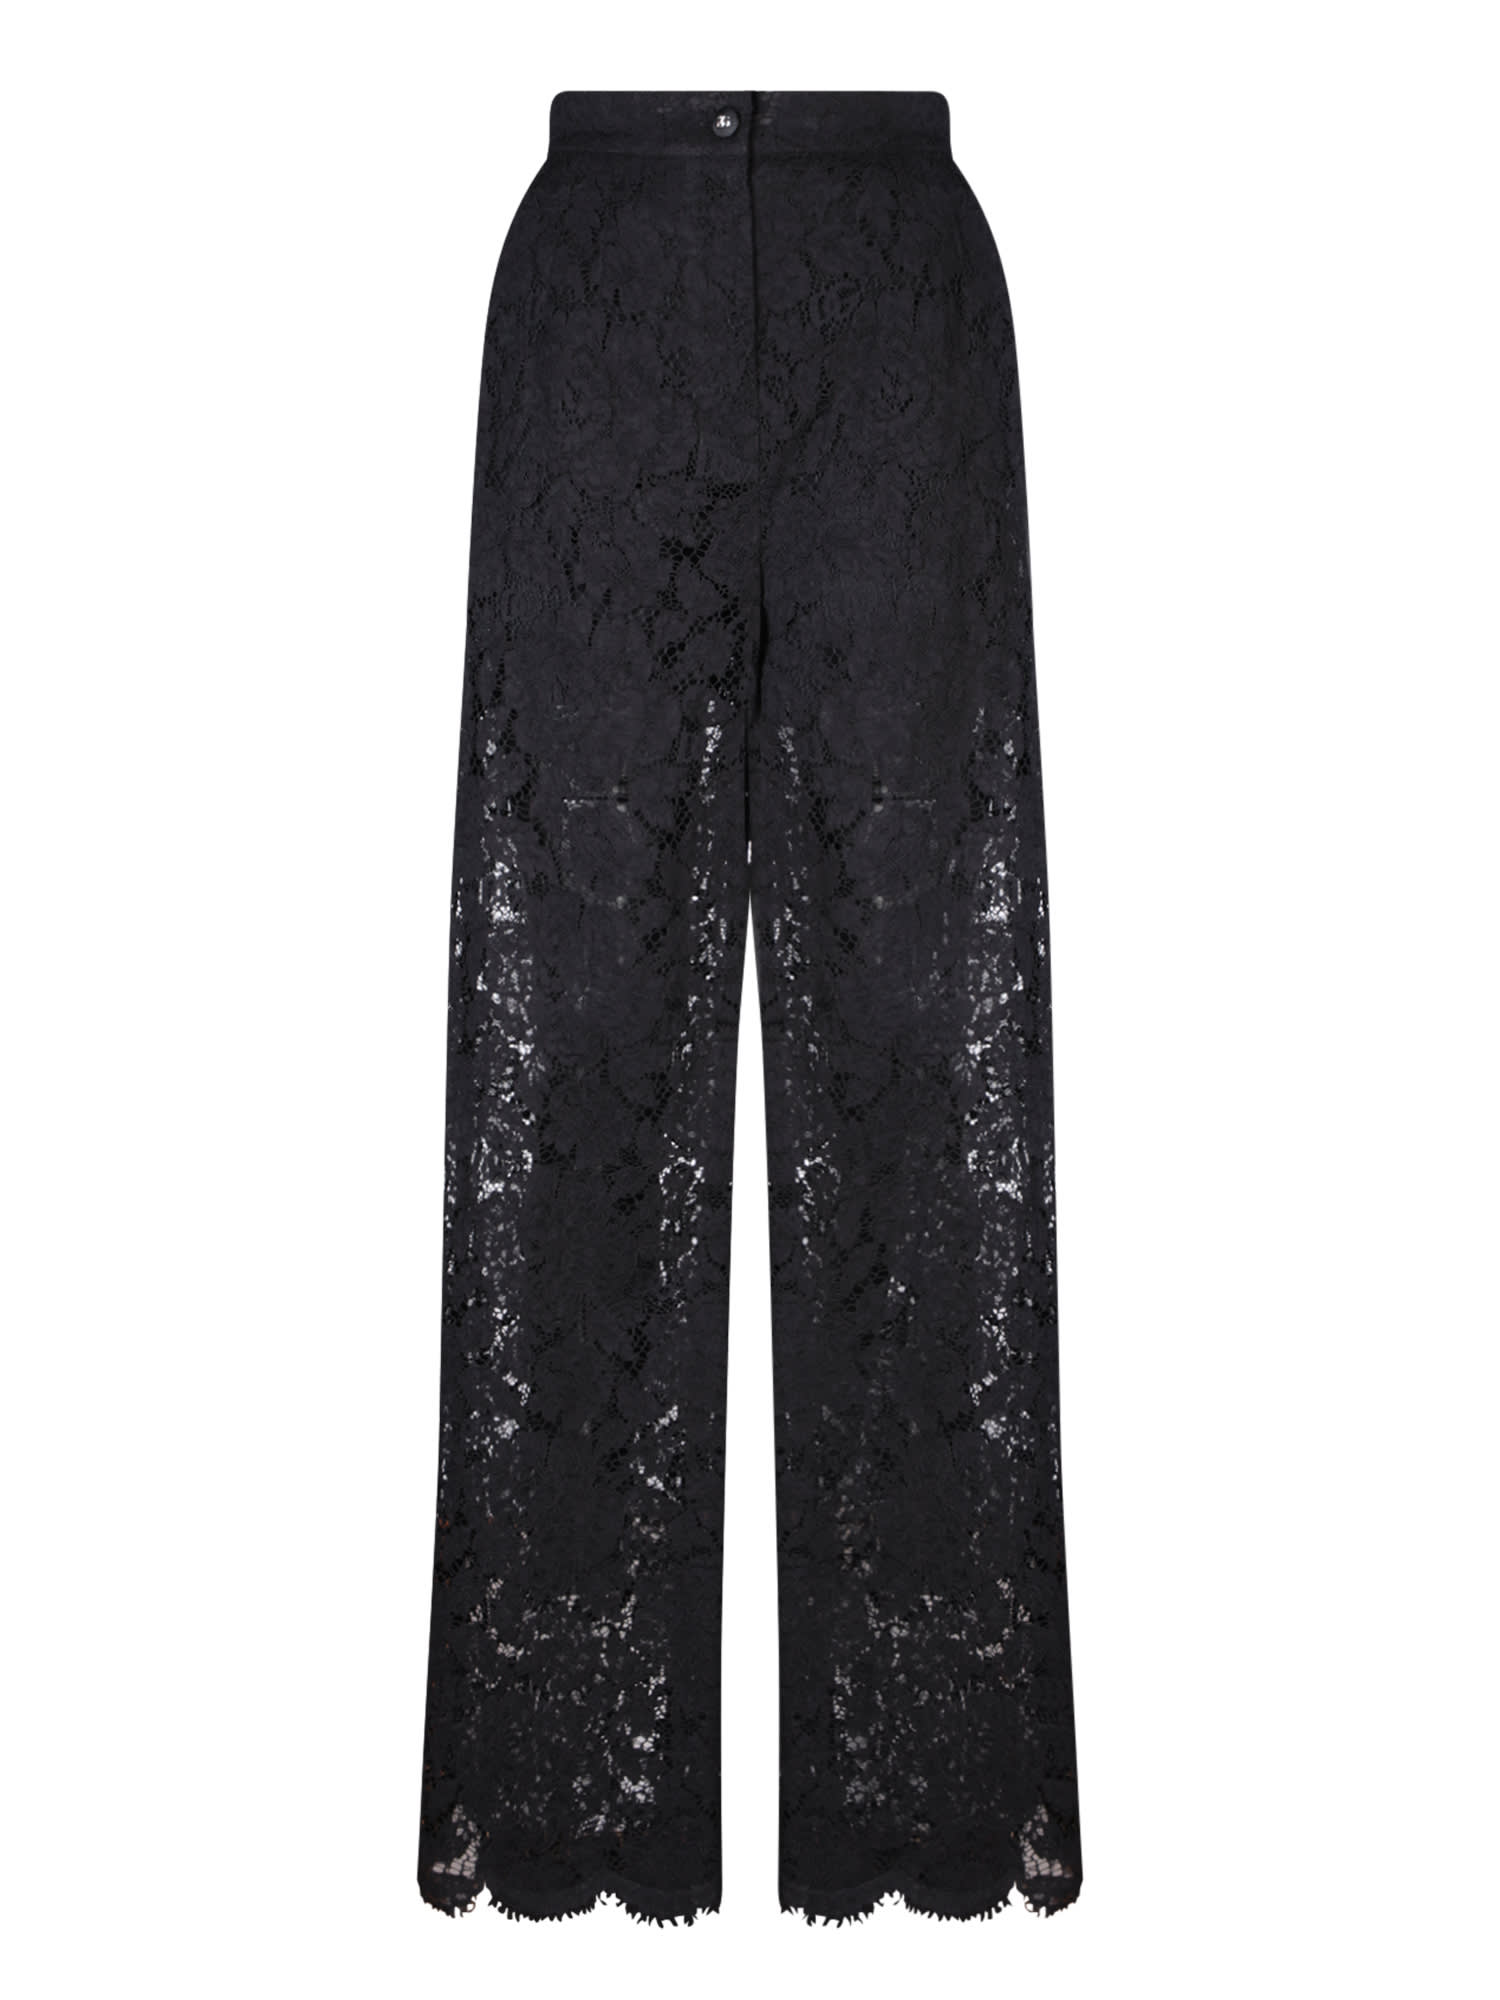 Dolce & Gabbana Flared Black Trousers